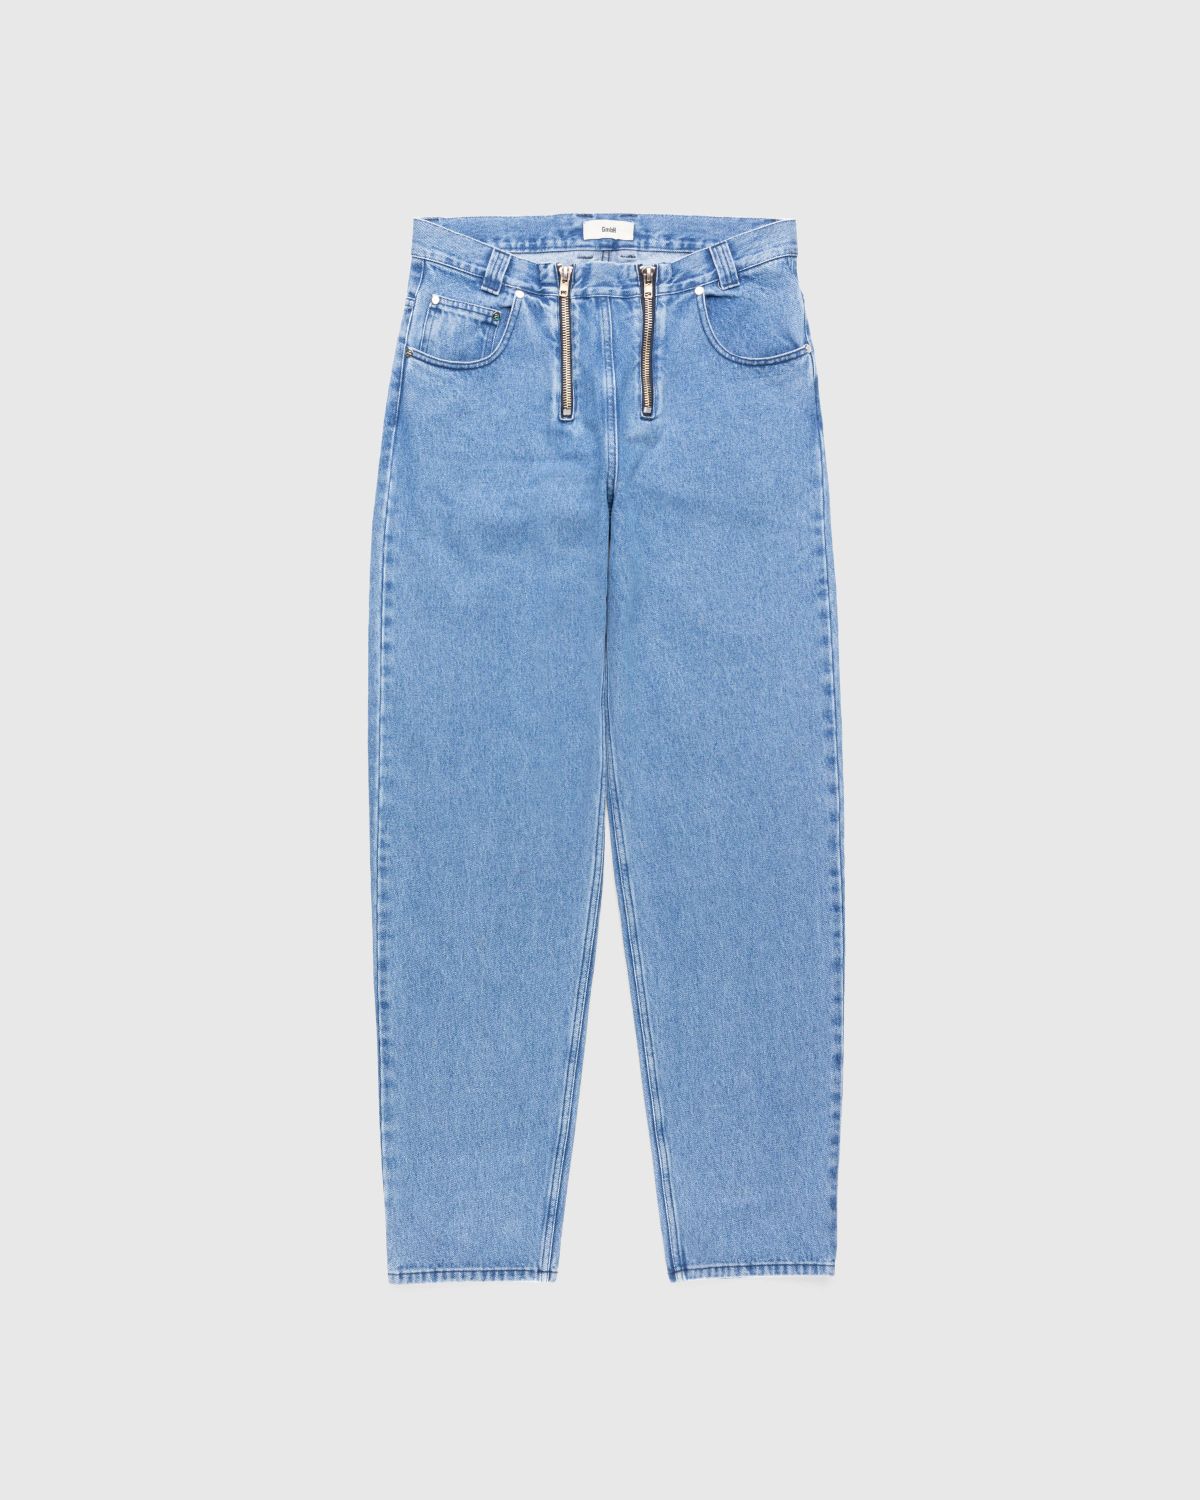 GmbH – Cyrus Denim Trousers Indigo Blue - Pants - Blue - Image 1